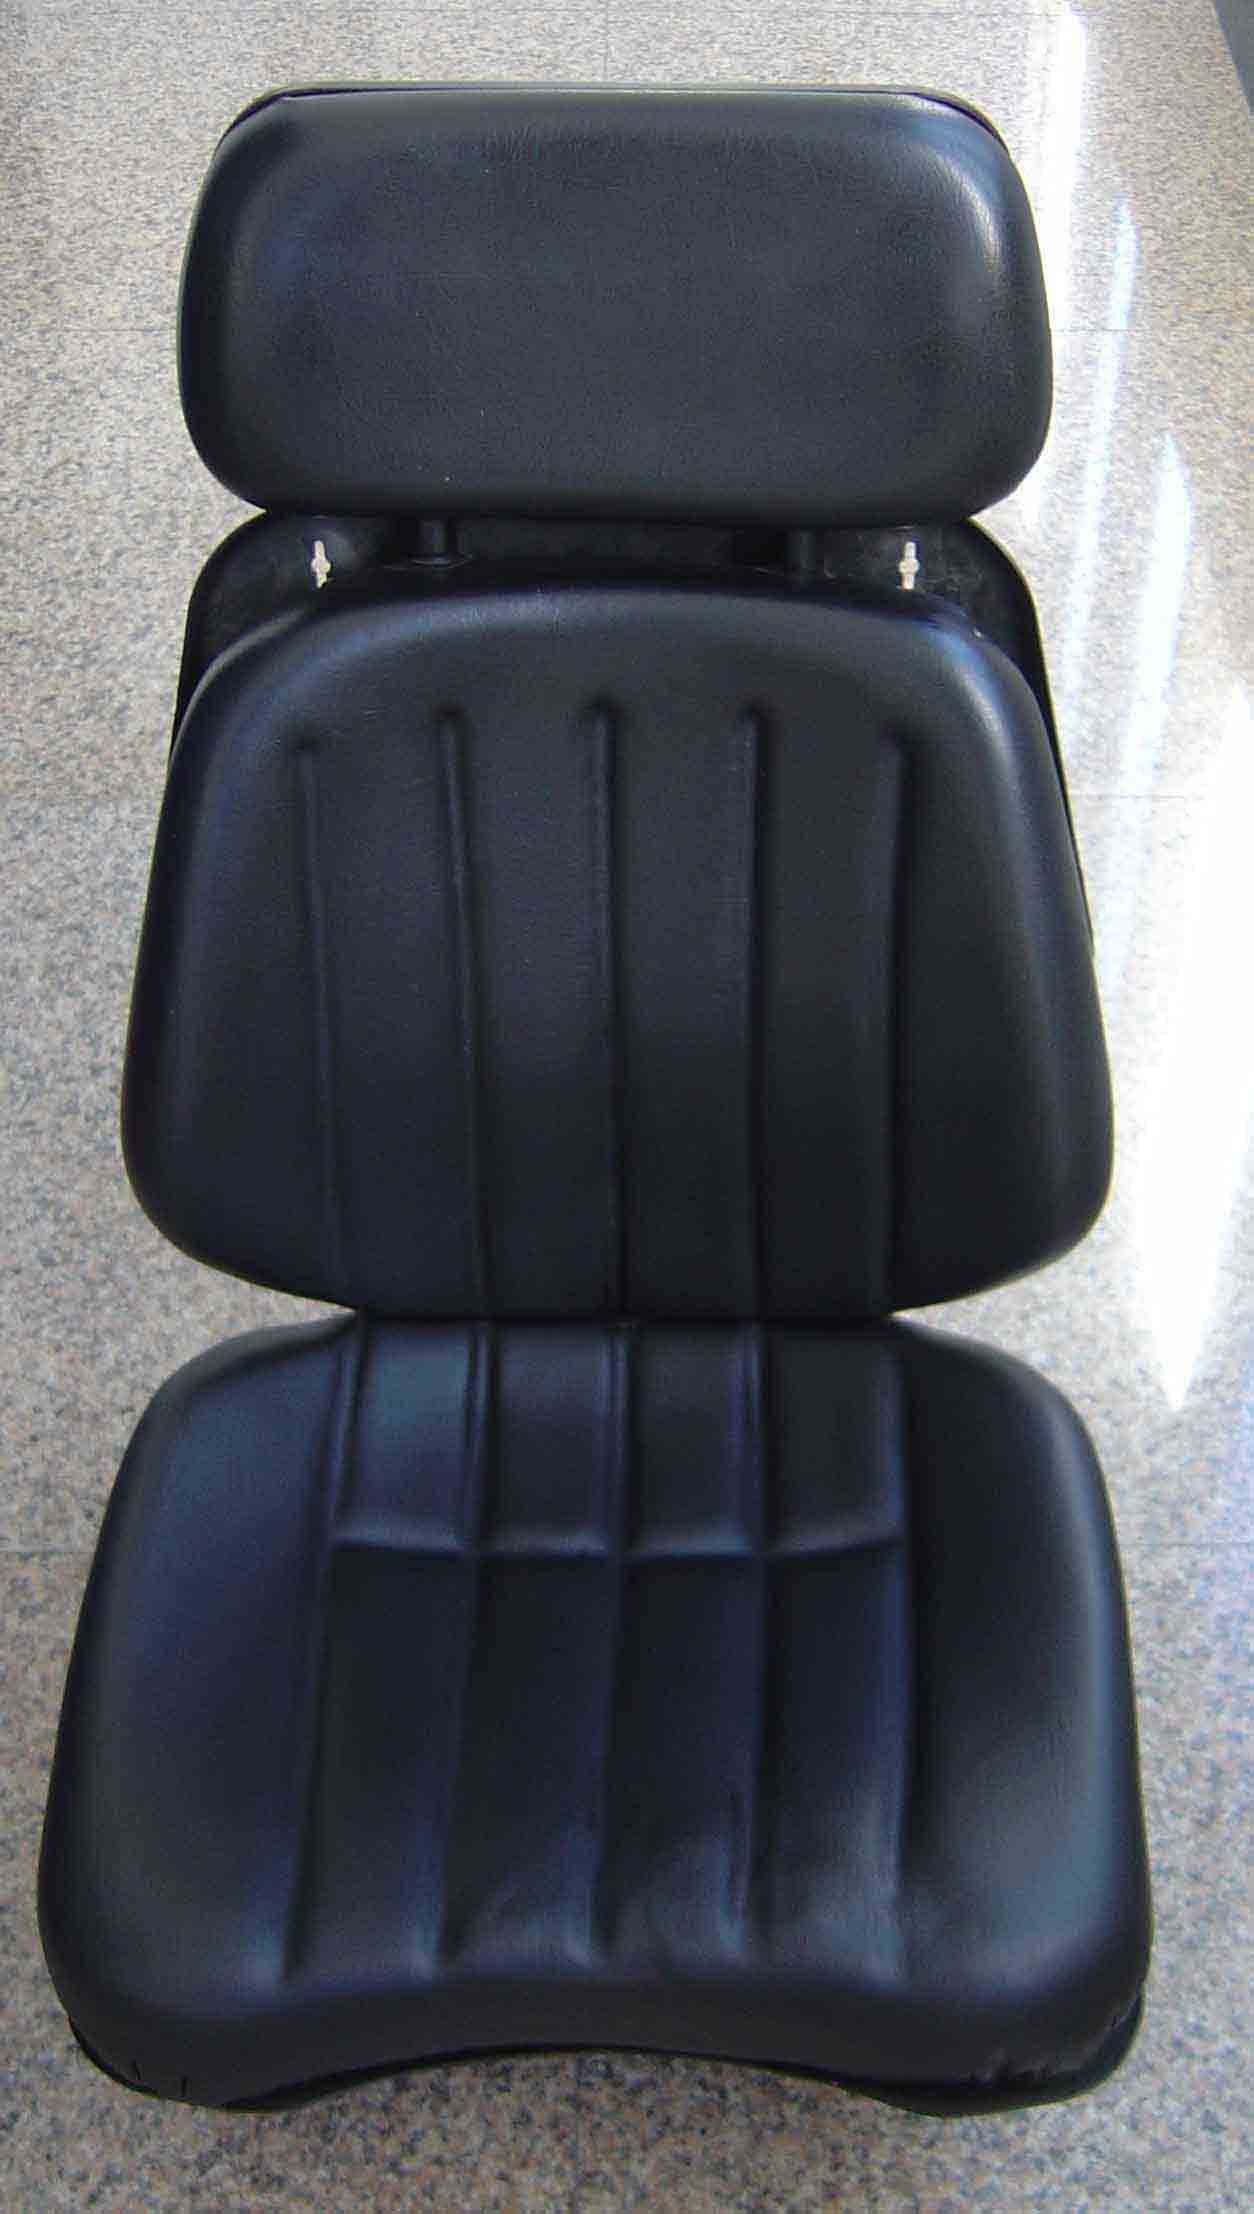 Atuomobile Seat